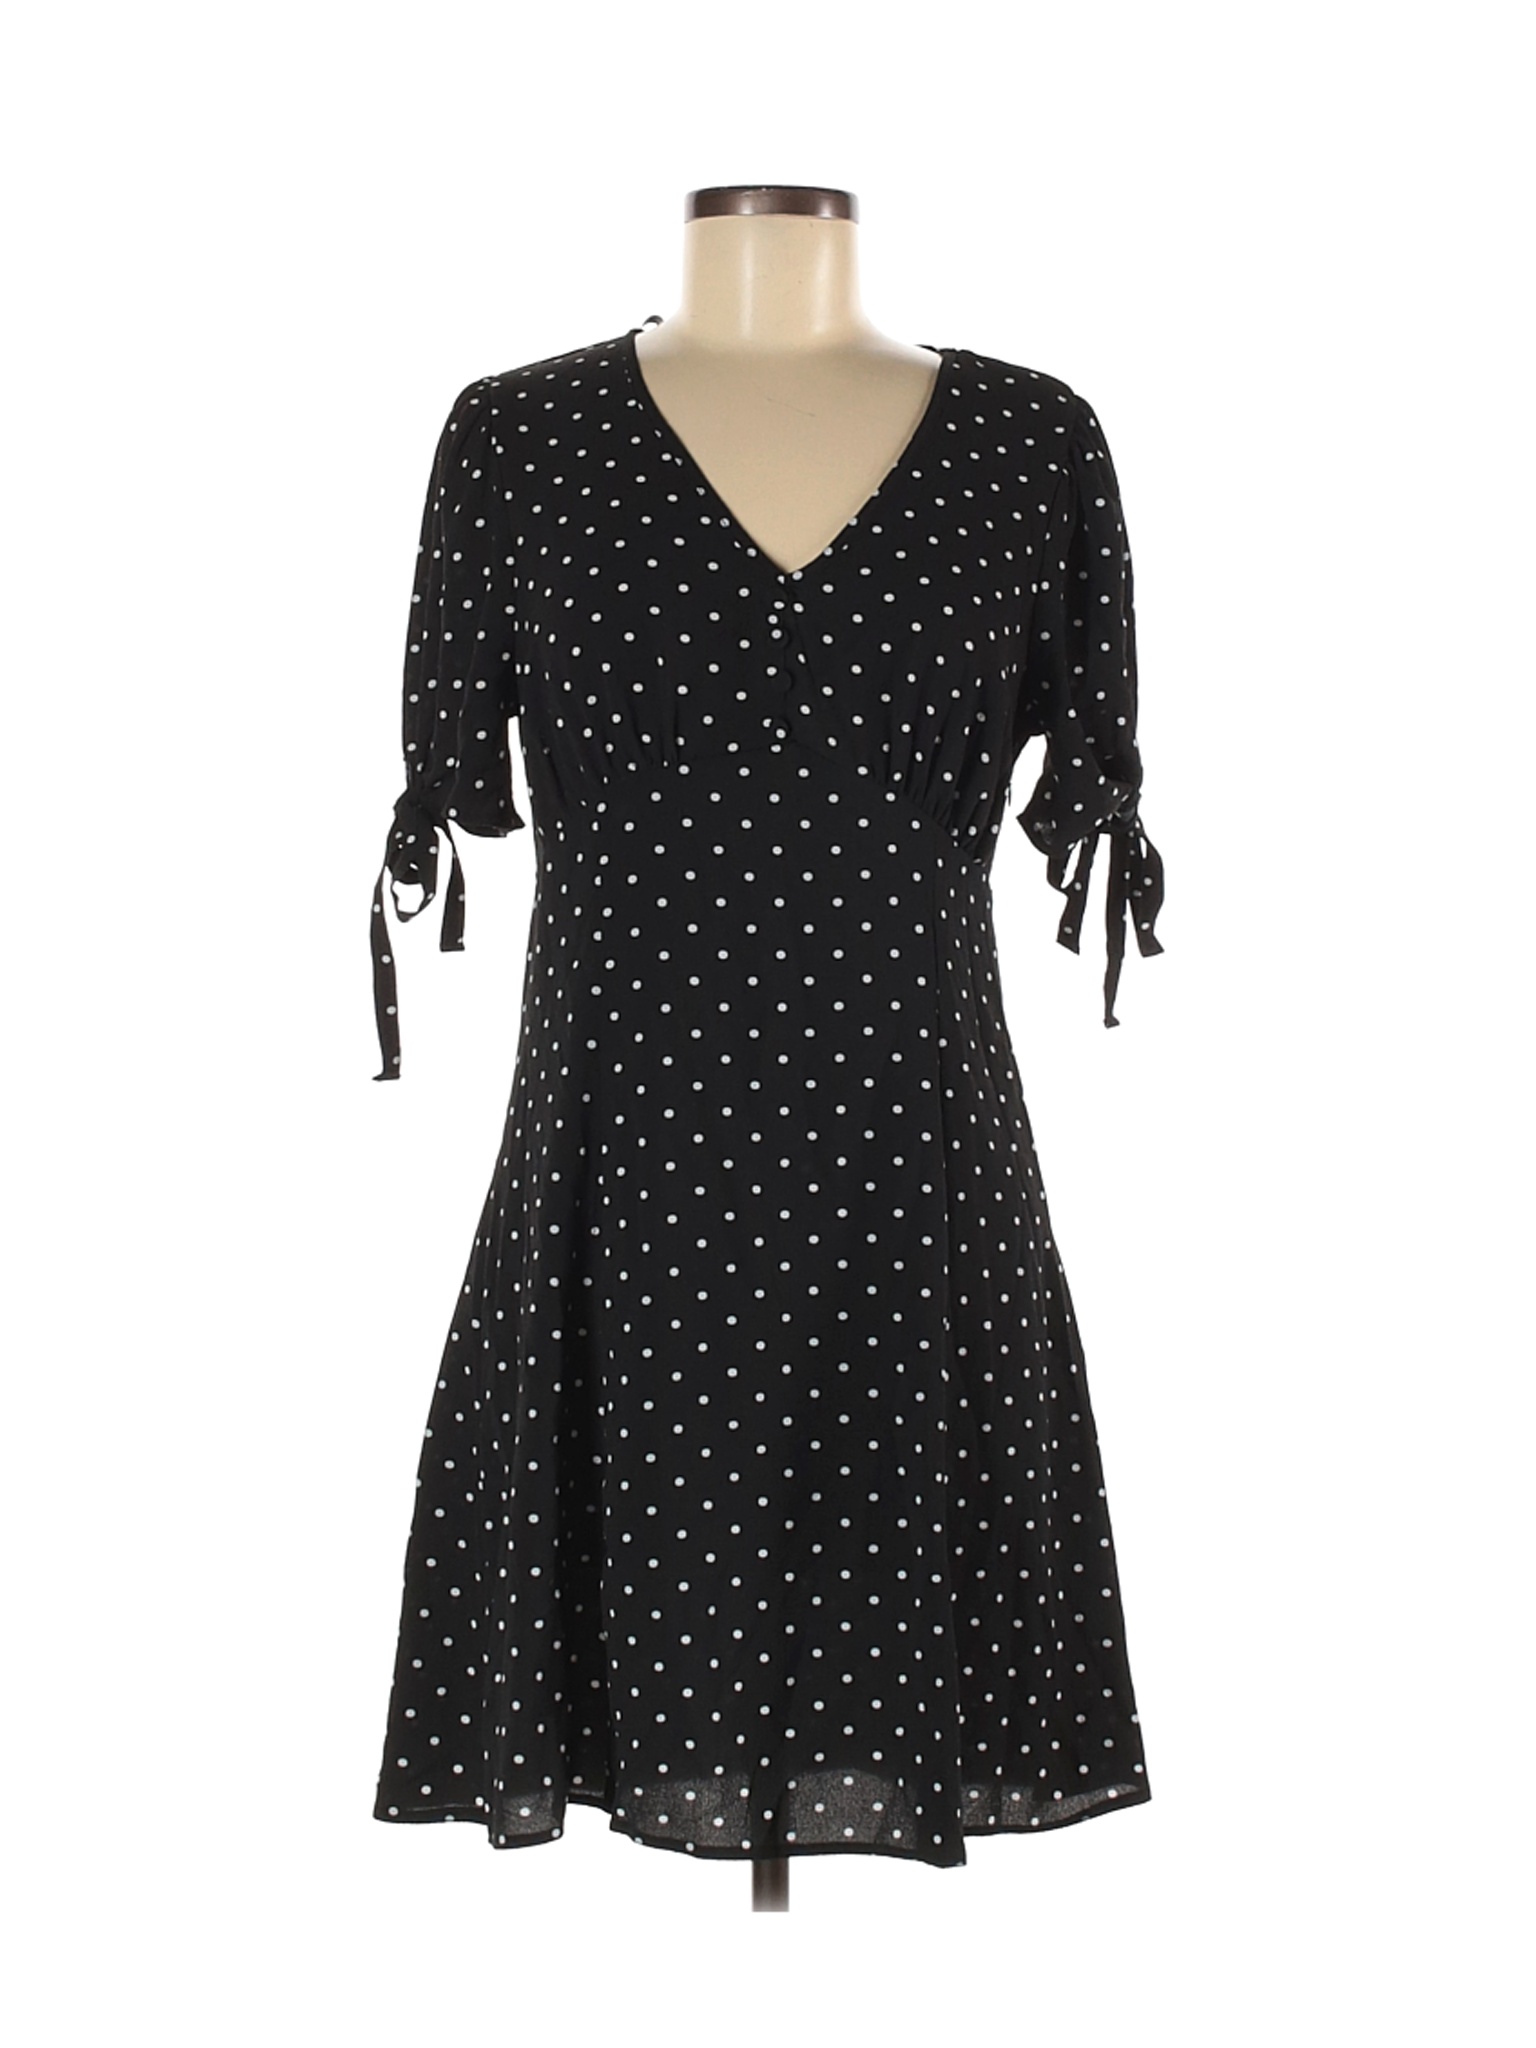 Primark Women Black Casual Dress 6 | eBay